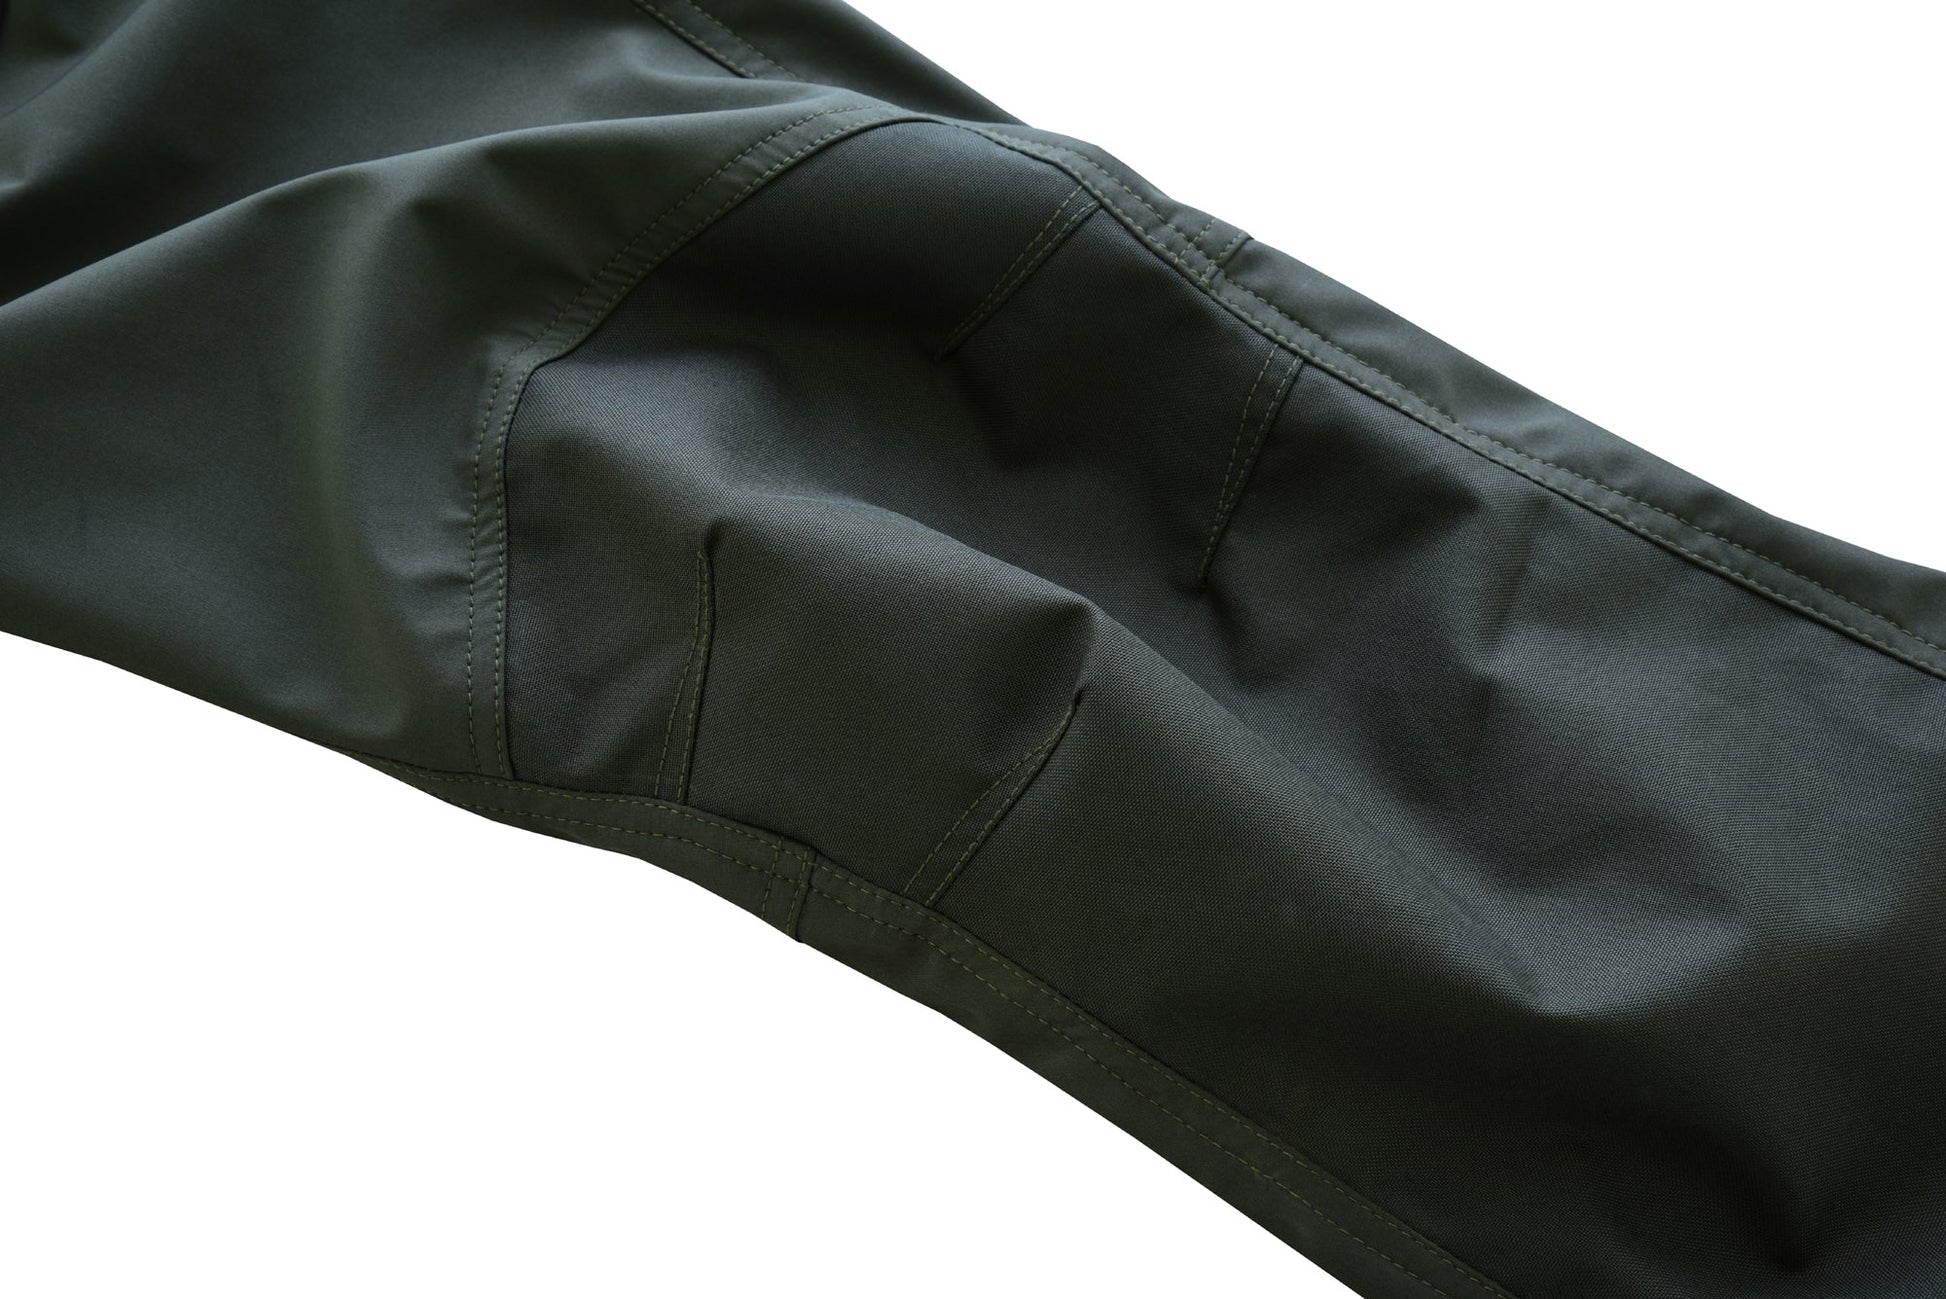 Pantalone caccia KONUSTEX GAMEXEL impermeabile verde 376 - OnTheRoad.shop - KONUSTEX